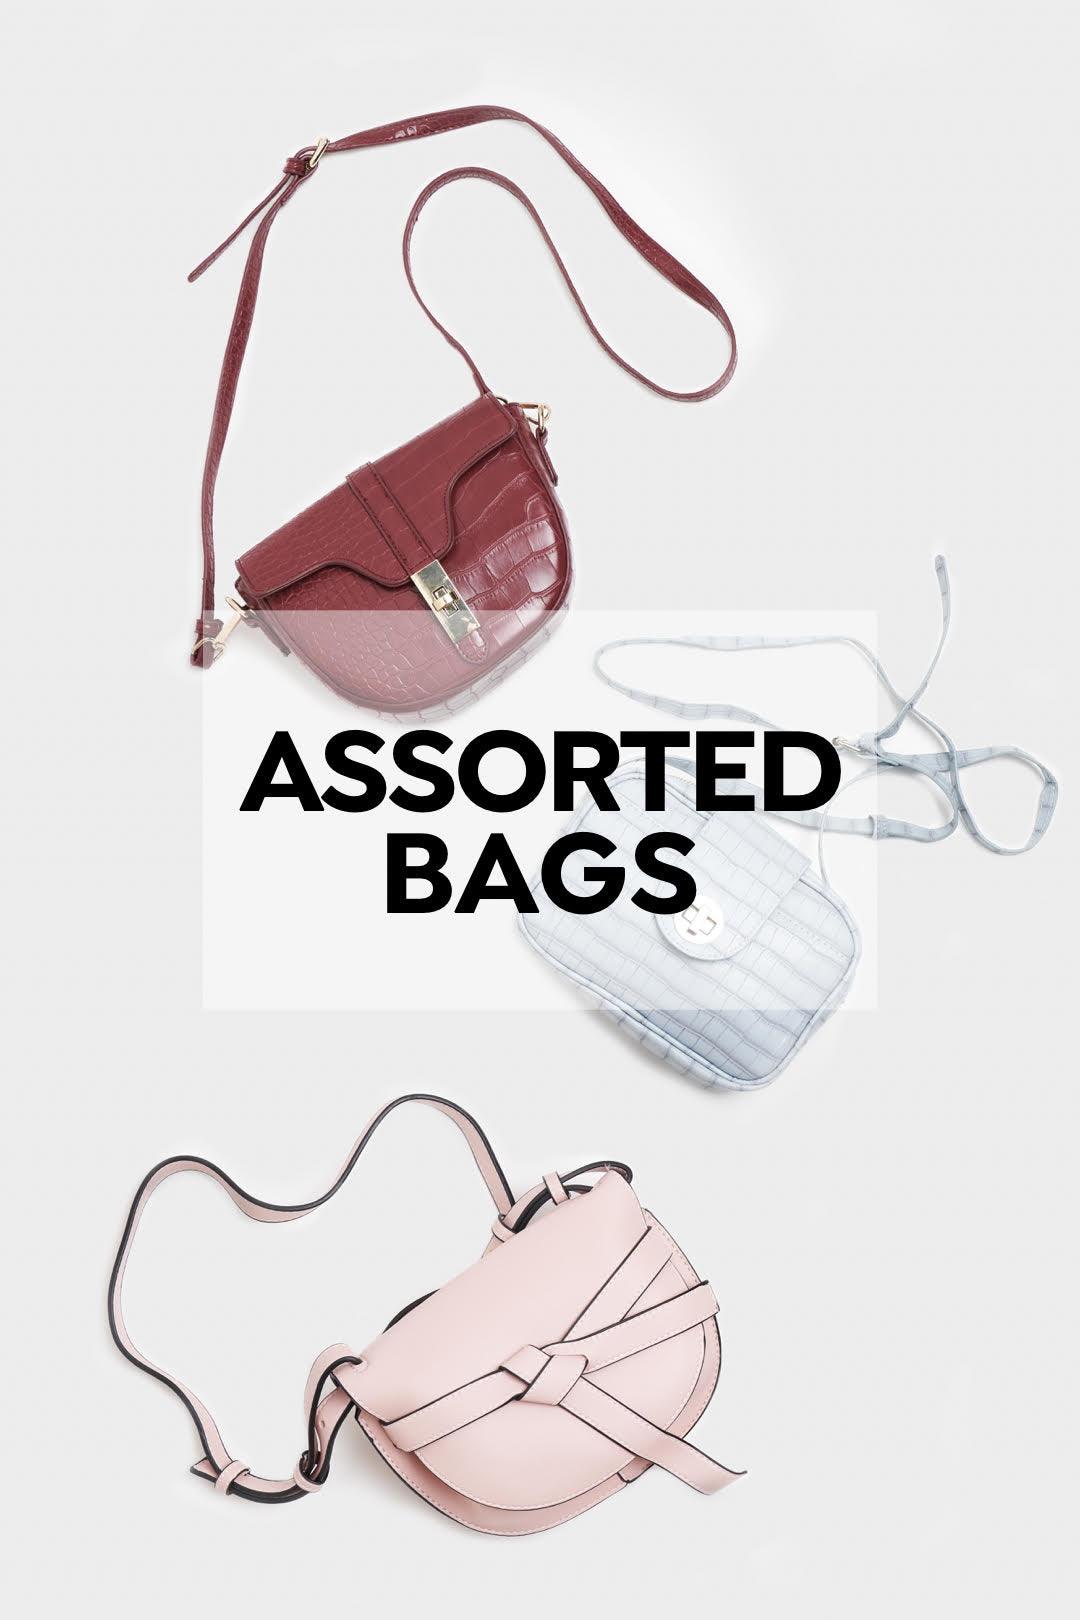 Assorted Bags , Clutches, Purses / Surprise Box - 3 pcs - Tasha Apparel